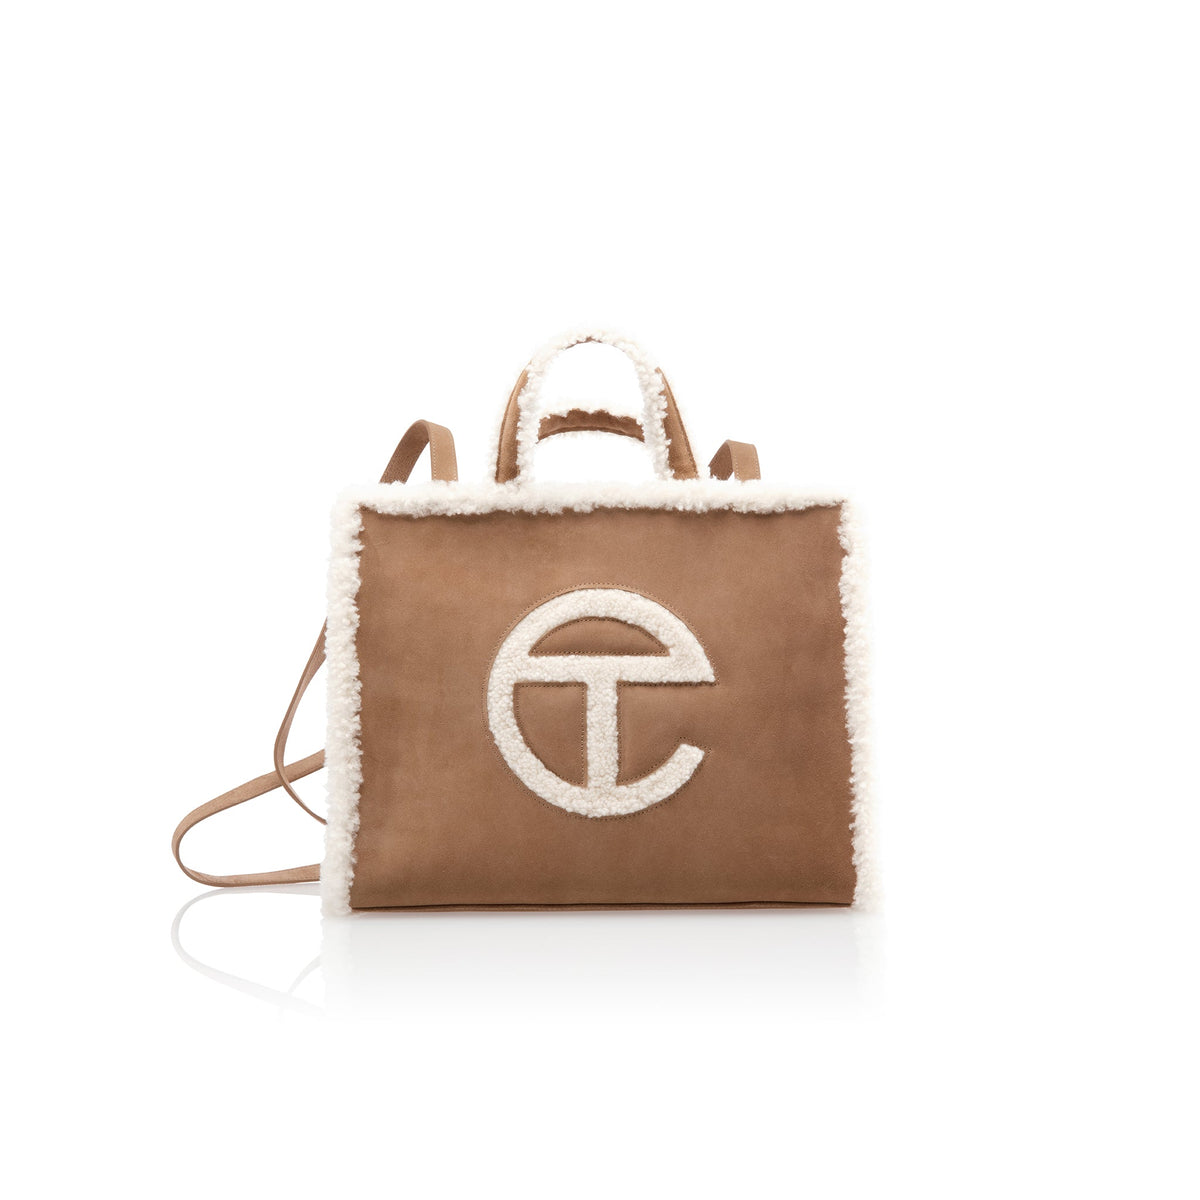 UGG x TELFAR Medium Shopper - Chestnut – shop.telfar